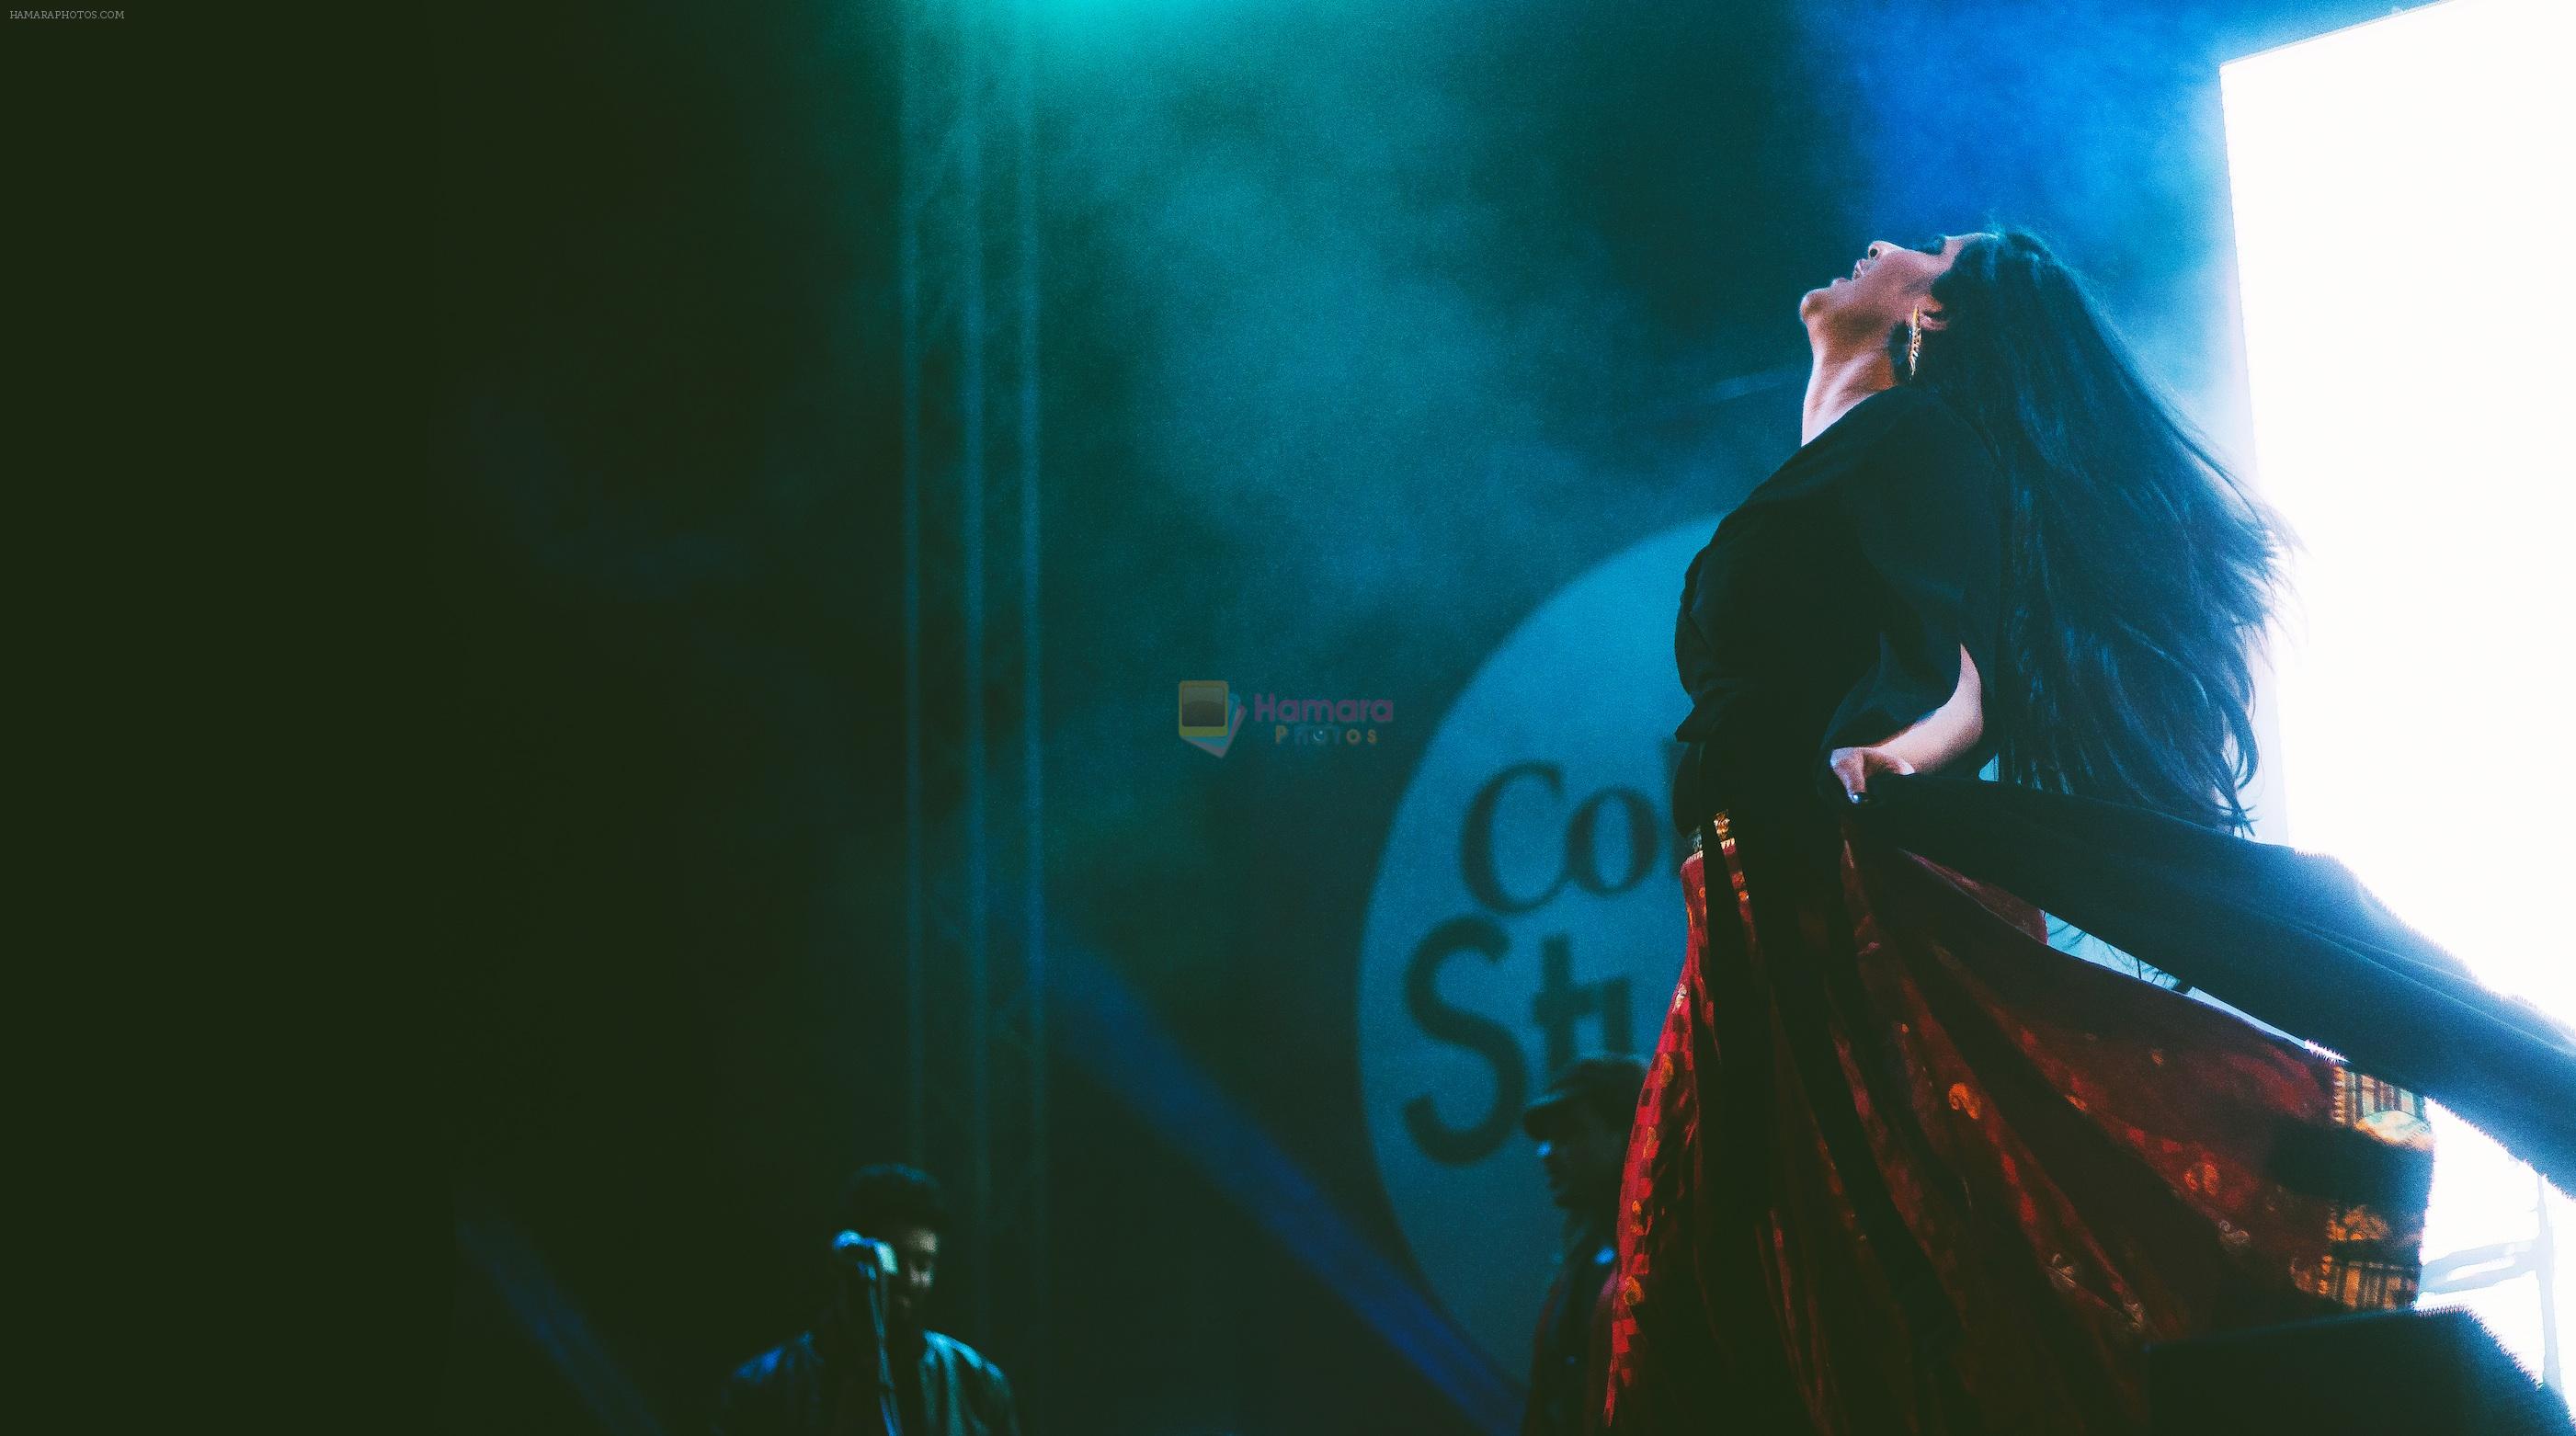 Sona Mohapatra performs at IIM Bangalore on 21st Nov 2014